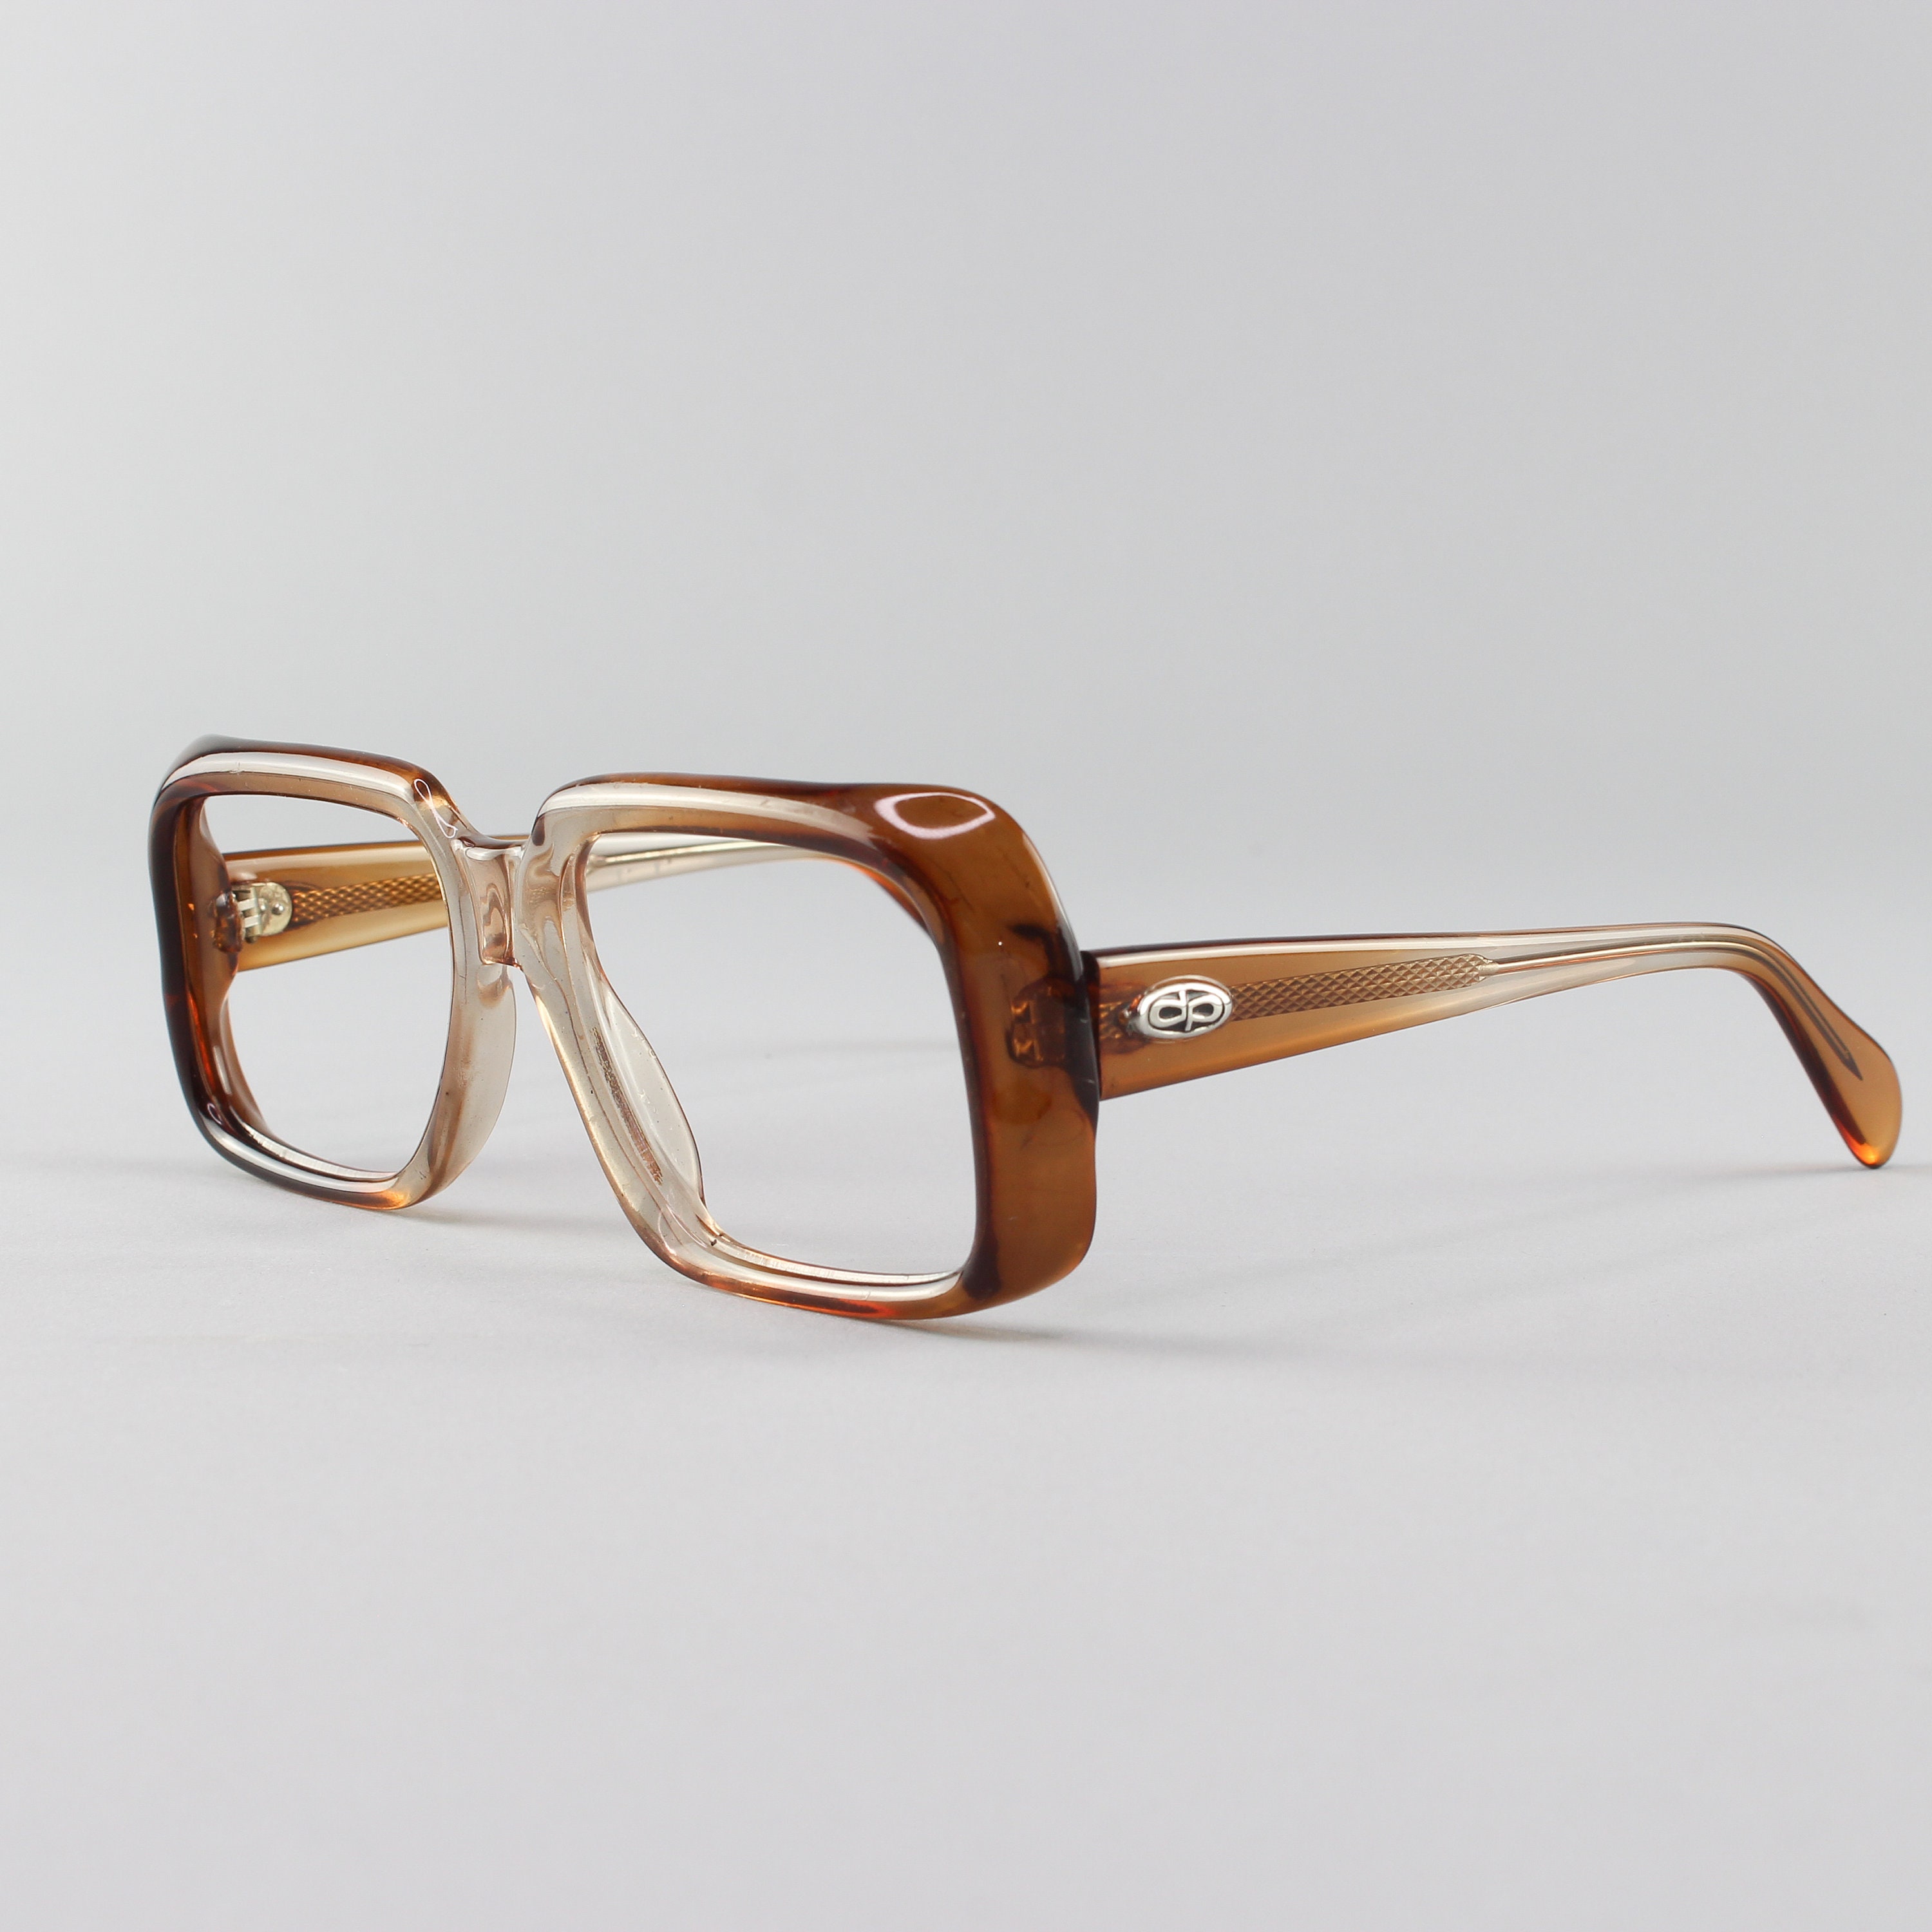 70s Vintage Glasses Clear Brown Eyeglasses 1970s Square Eyeglasses